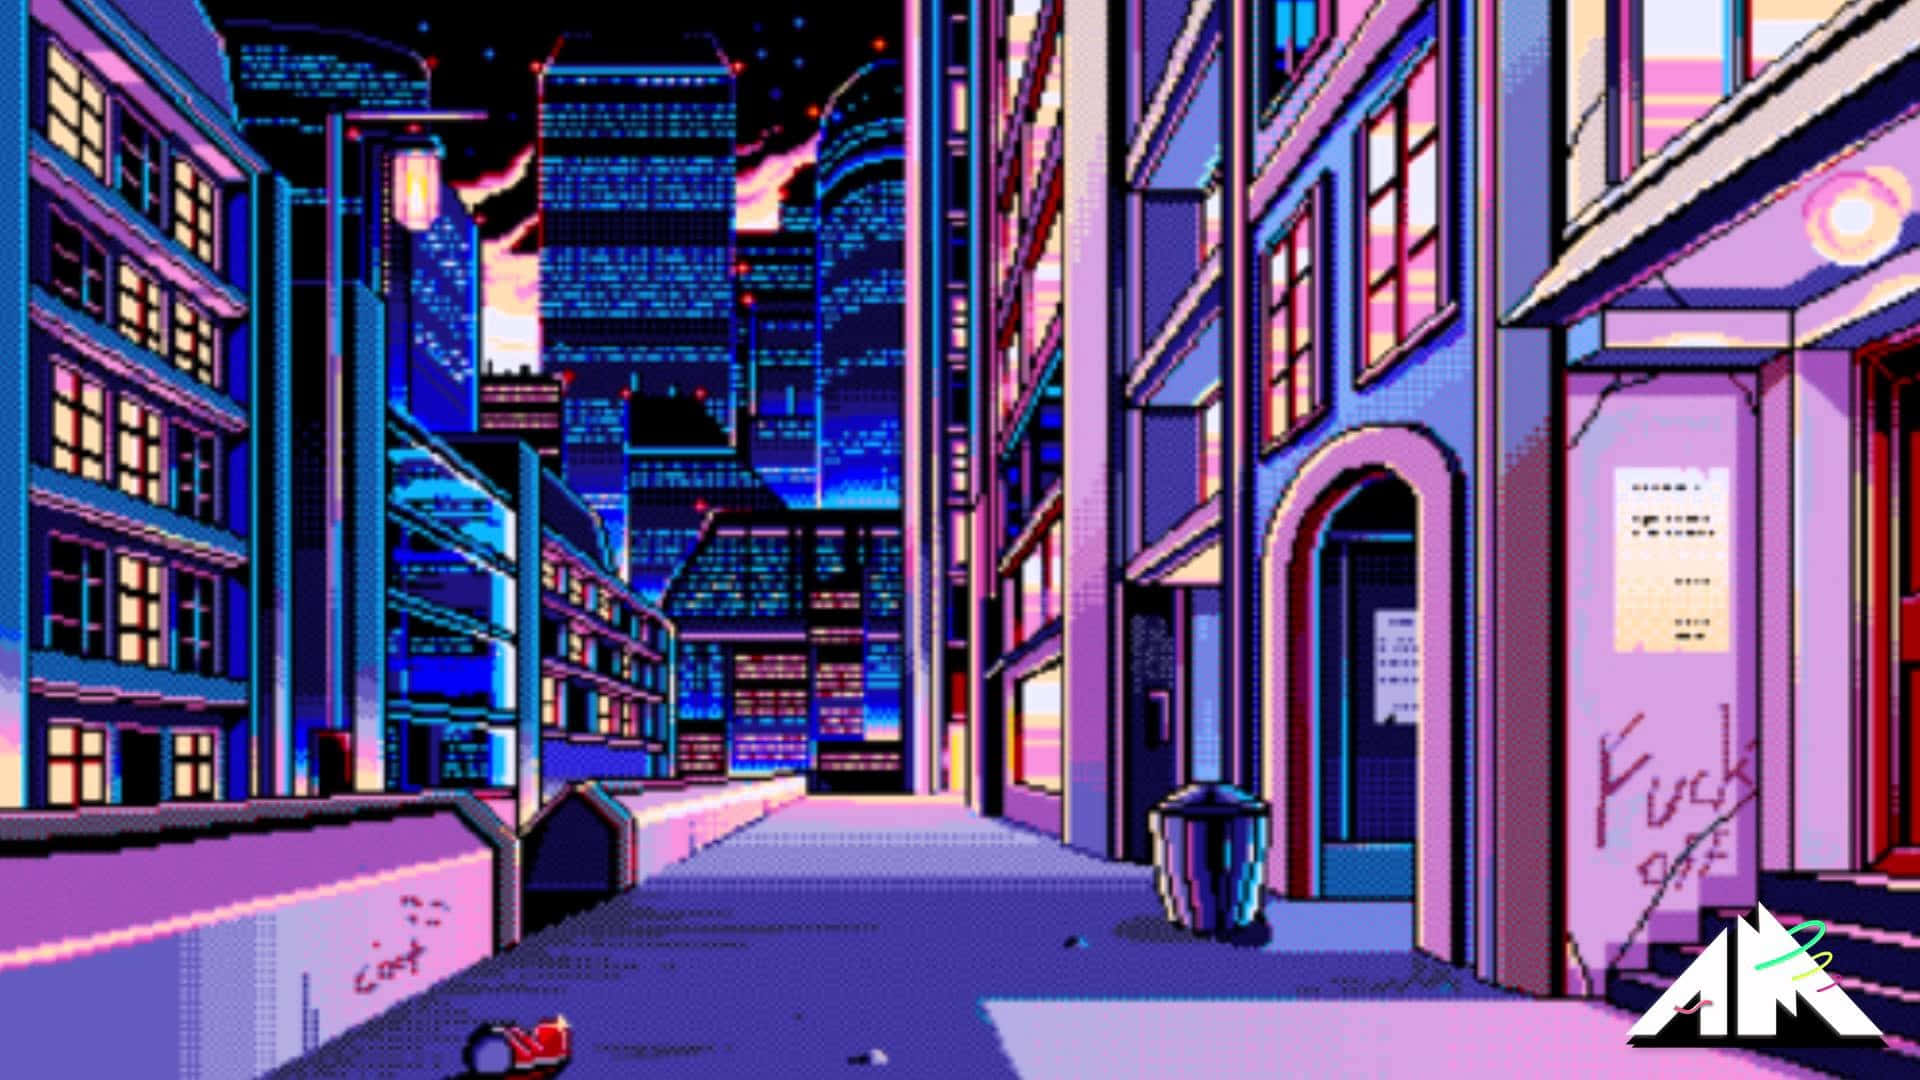 A Pixel Art Image Of A City At Night Wallpaper